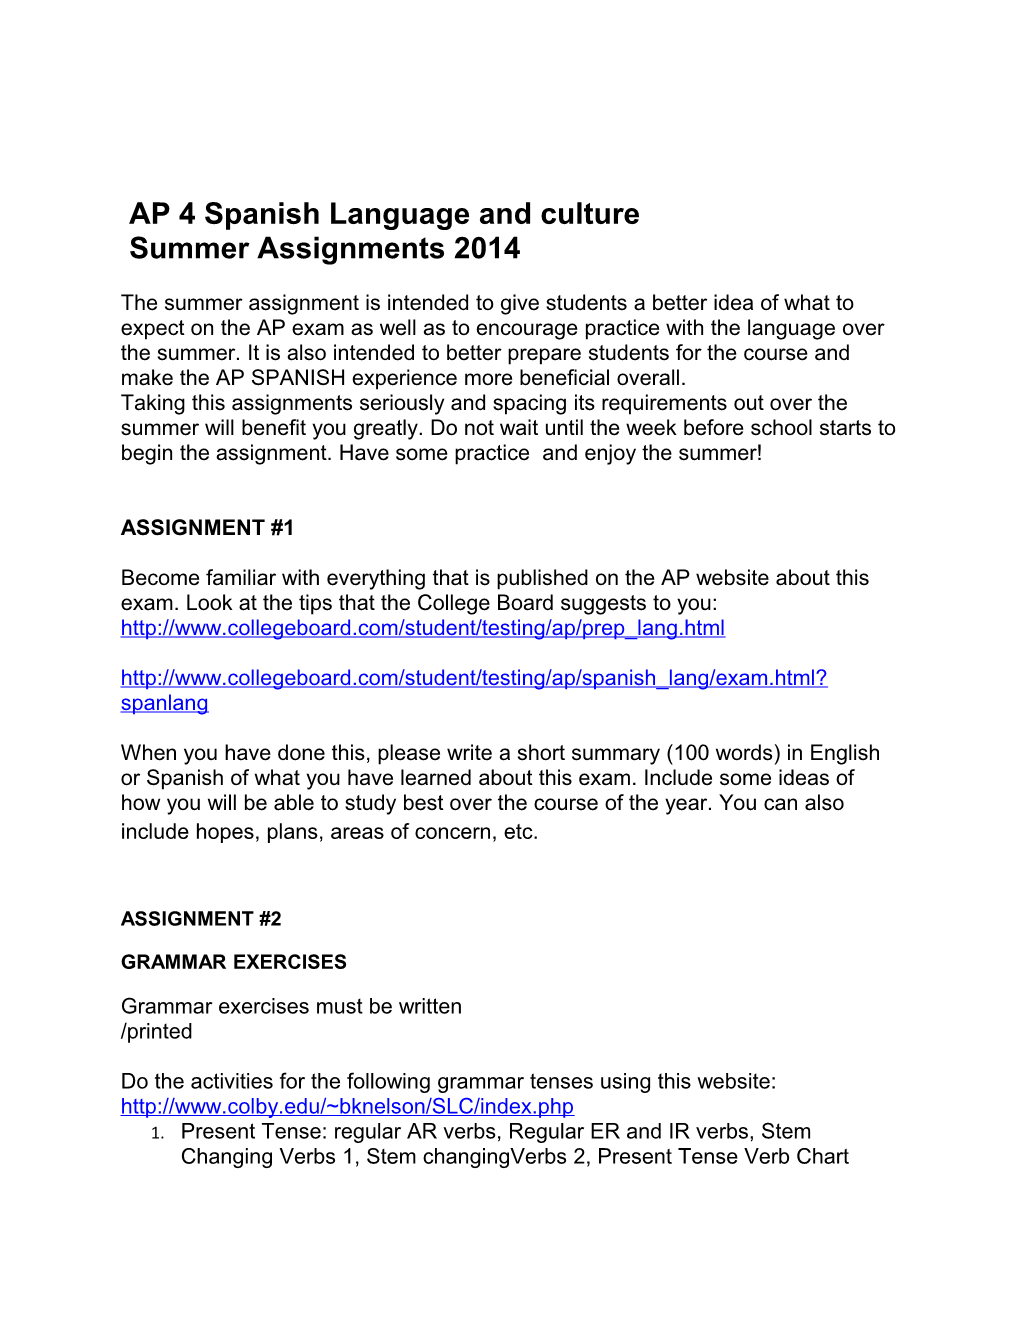 AP 4 Spanish Language and Culture